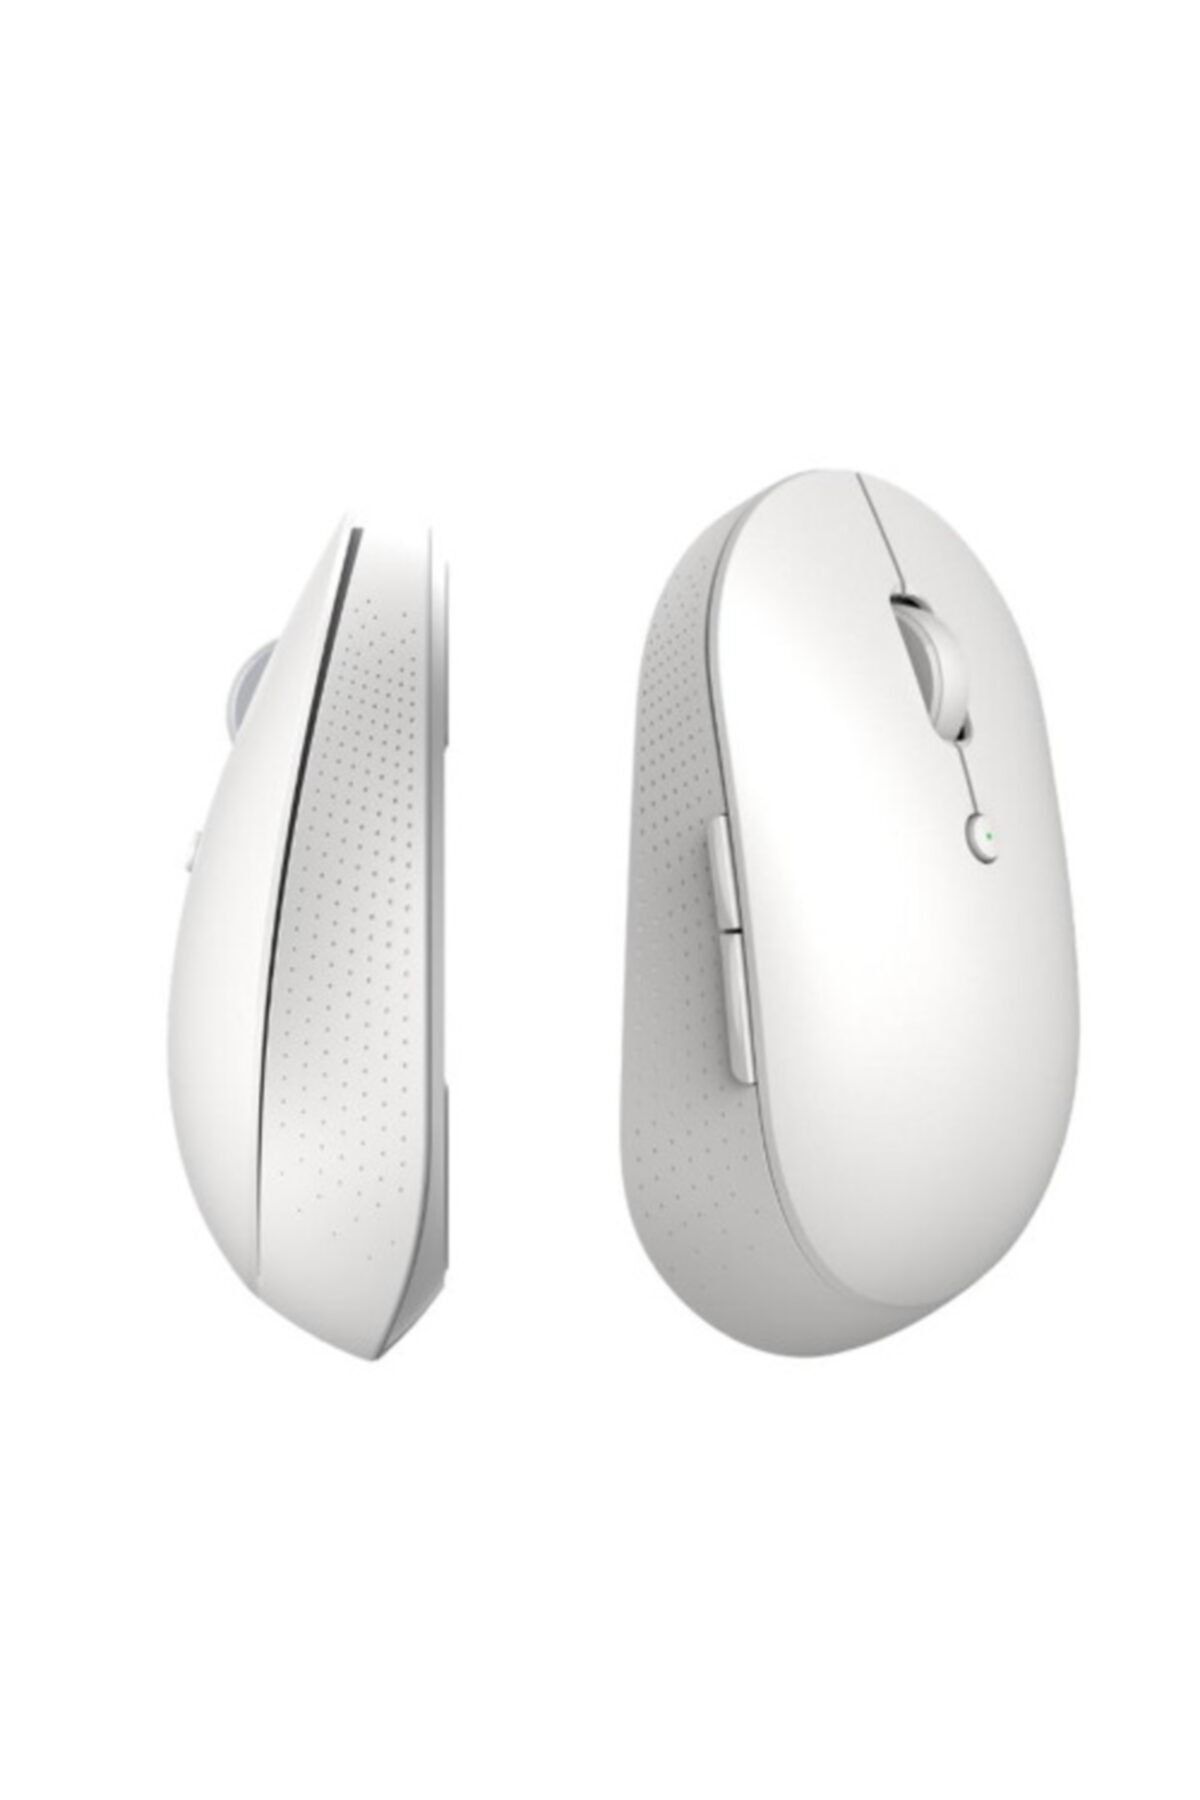 Xiaomi Mi Çift Modlu Kablosuz Bluetooth Mouse (beyaz)